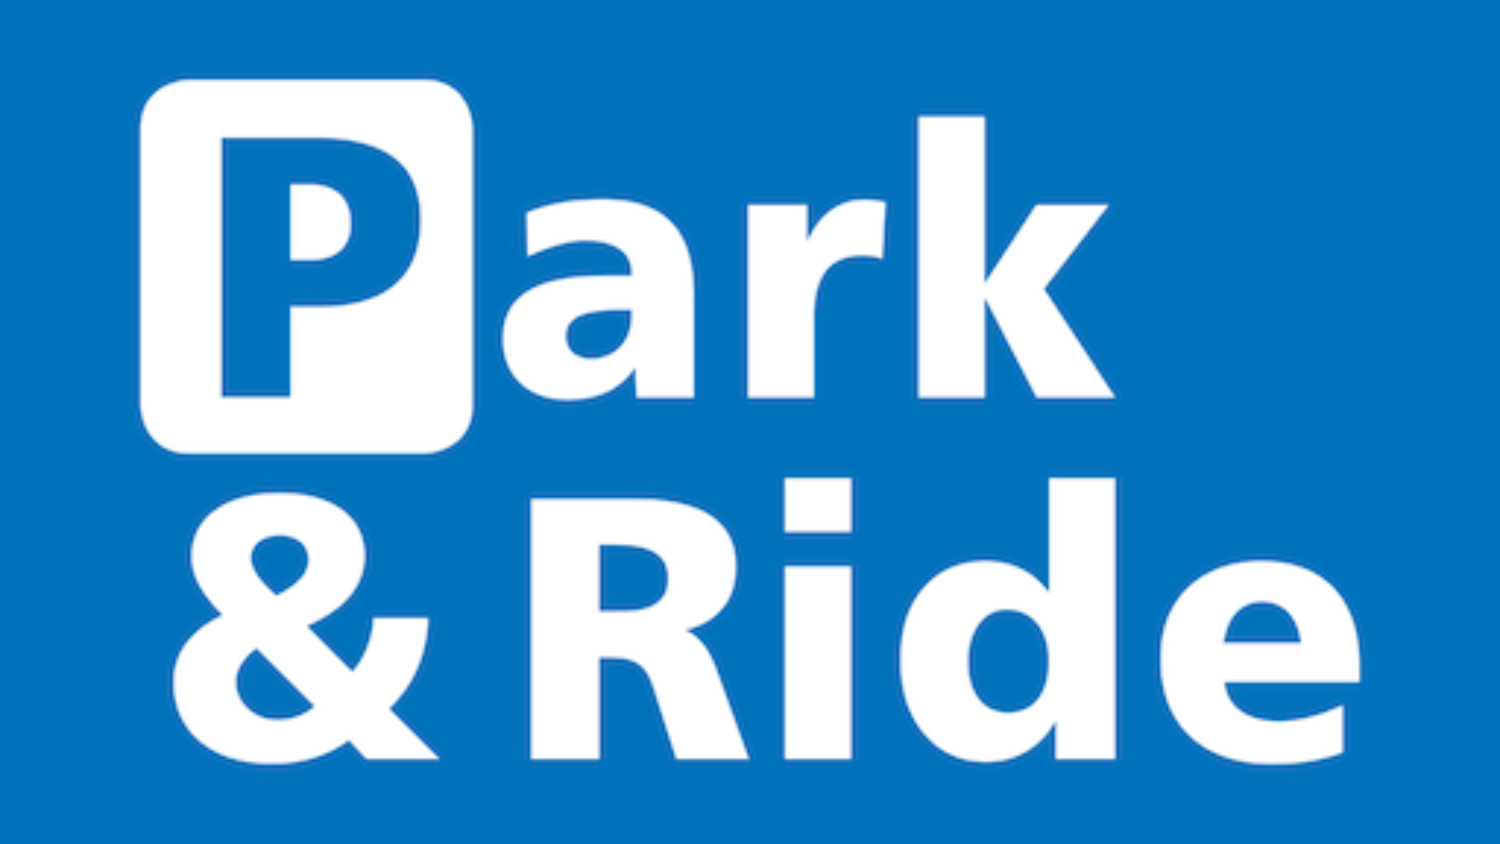 Park&Ride